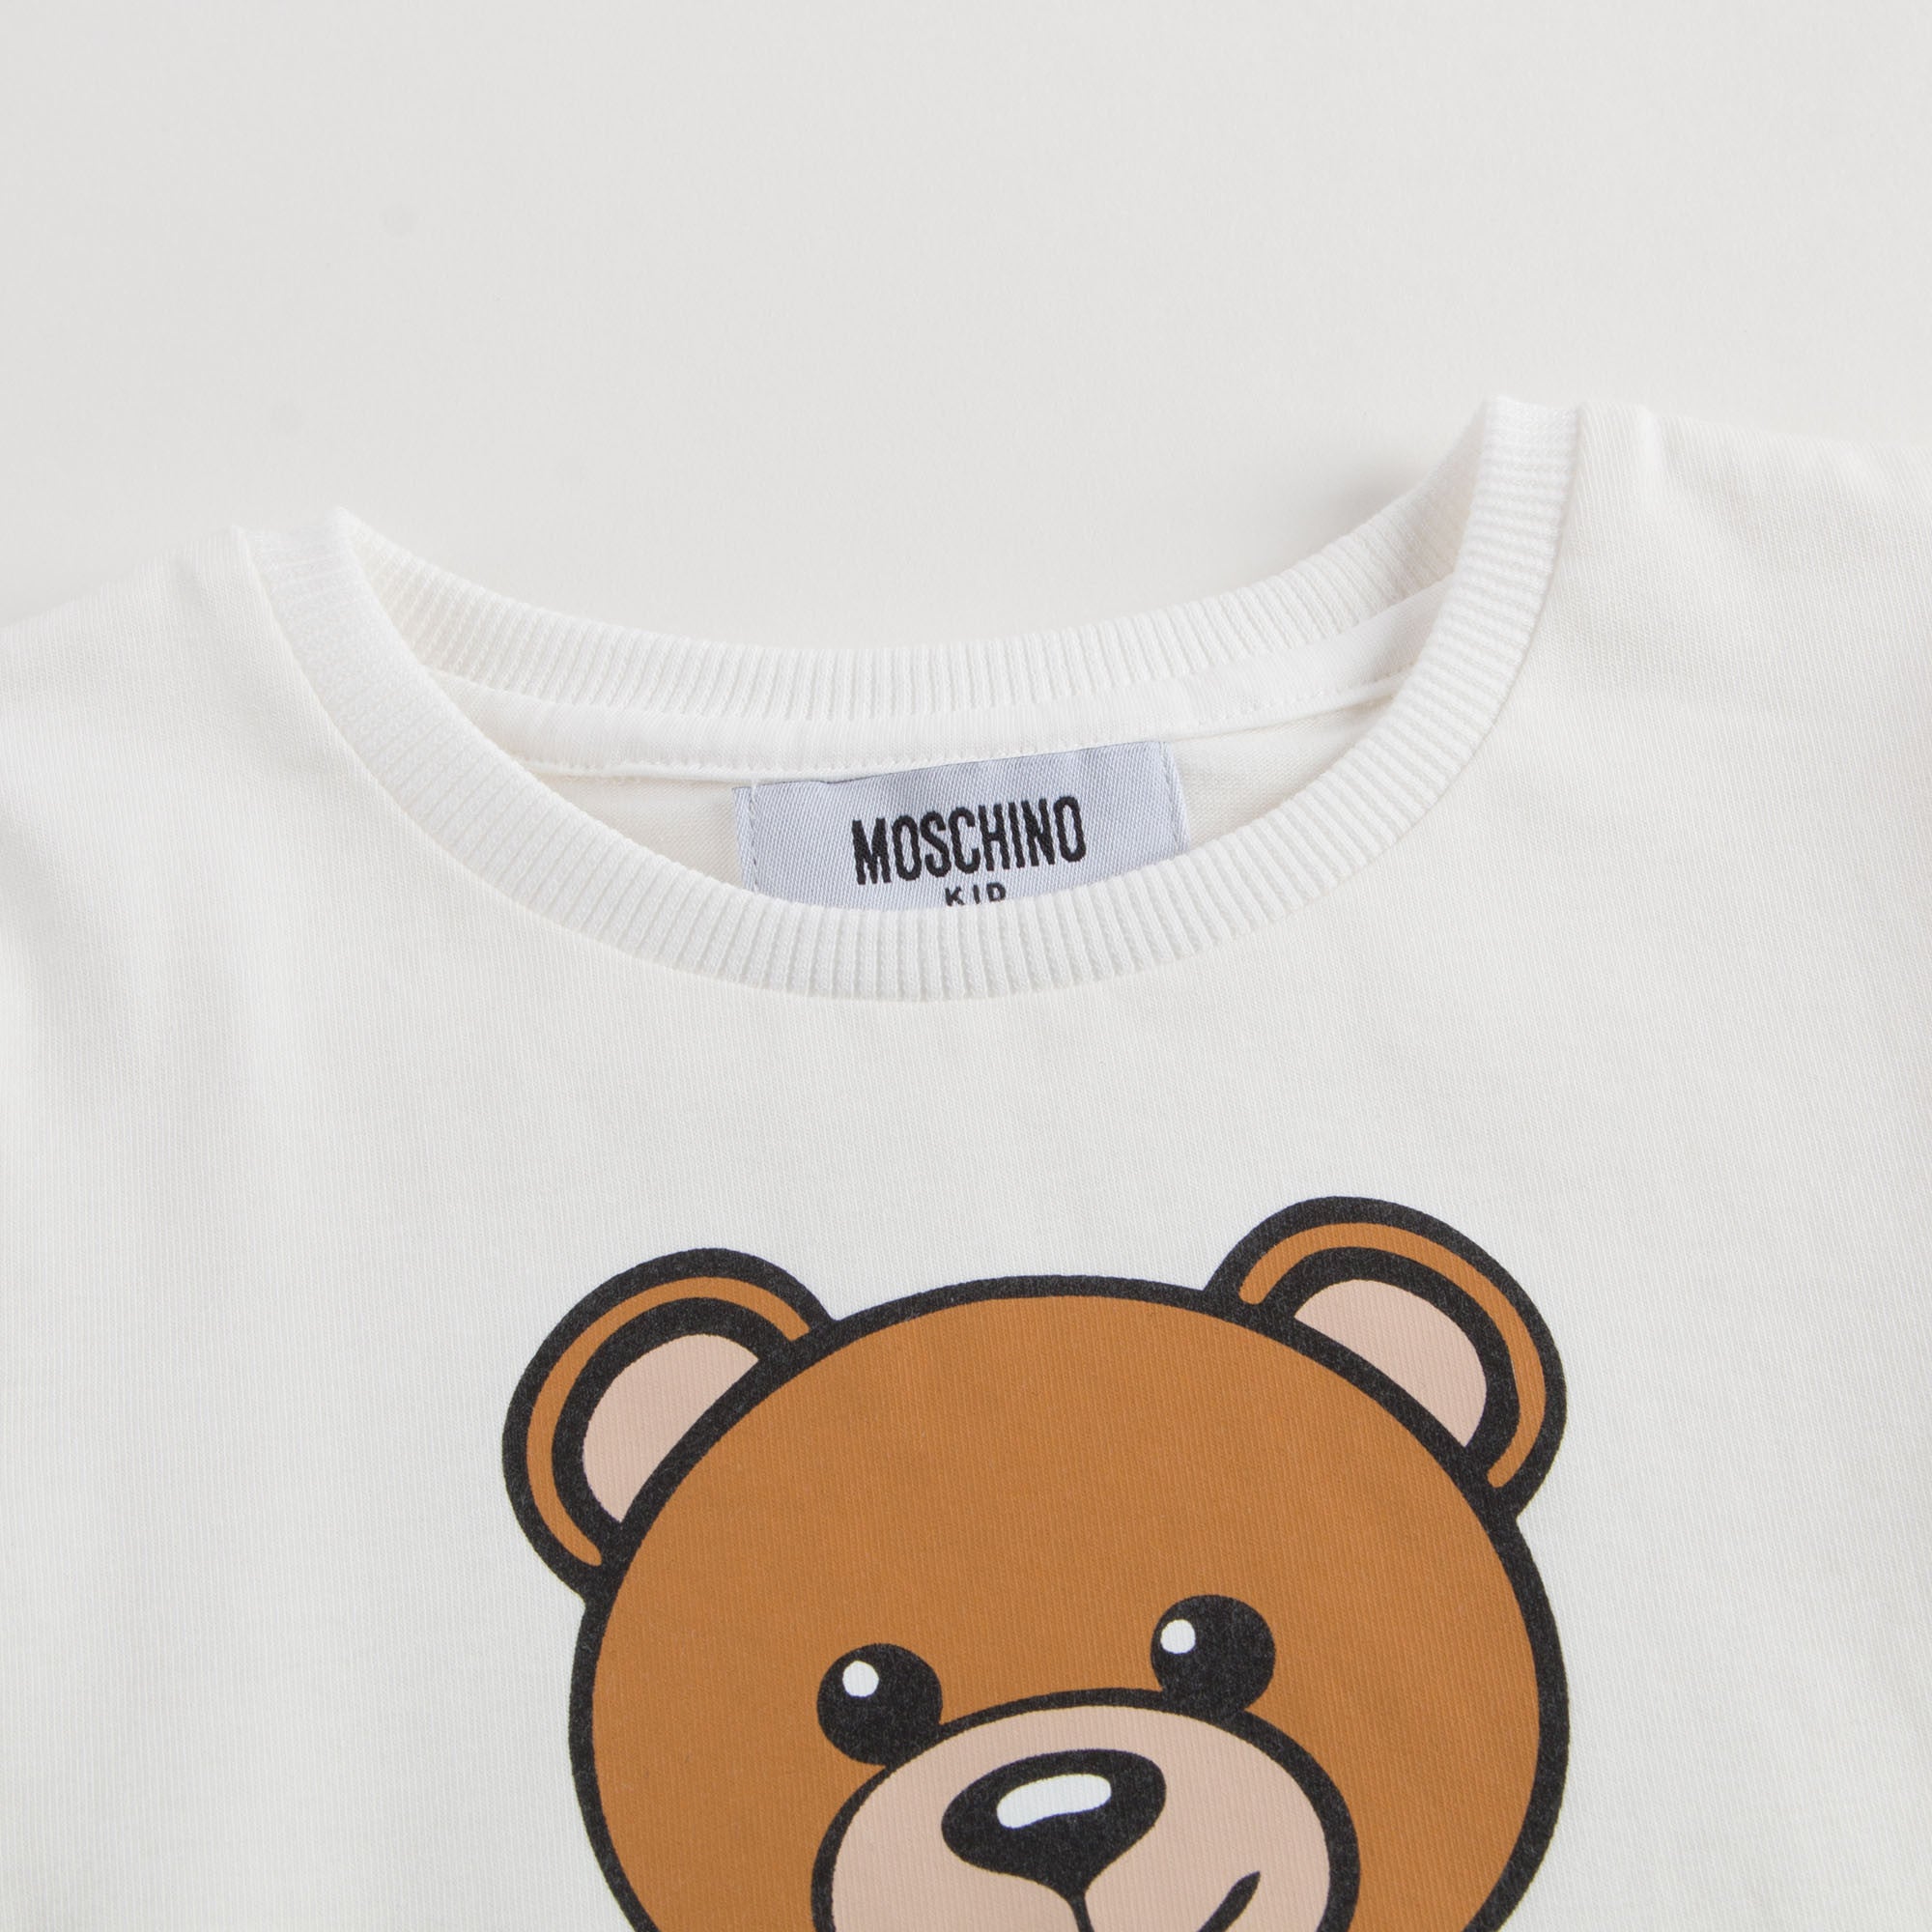 Girls White Teddy Bear T-shirt